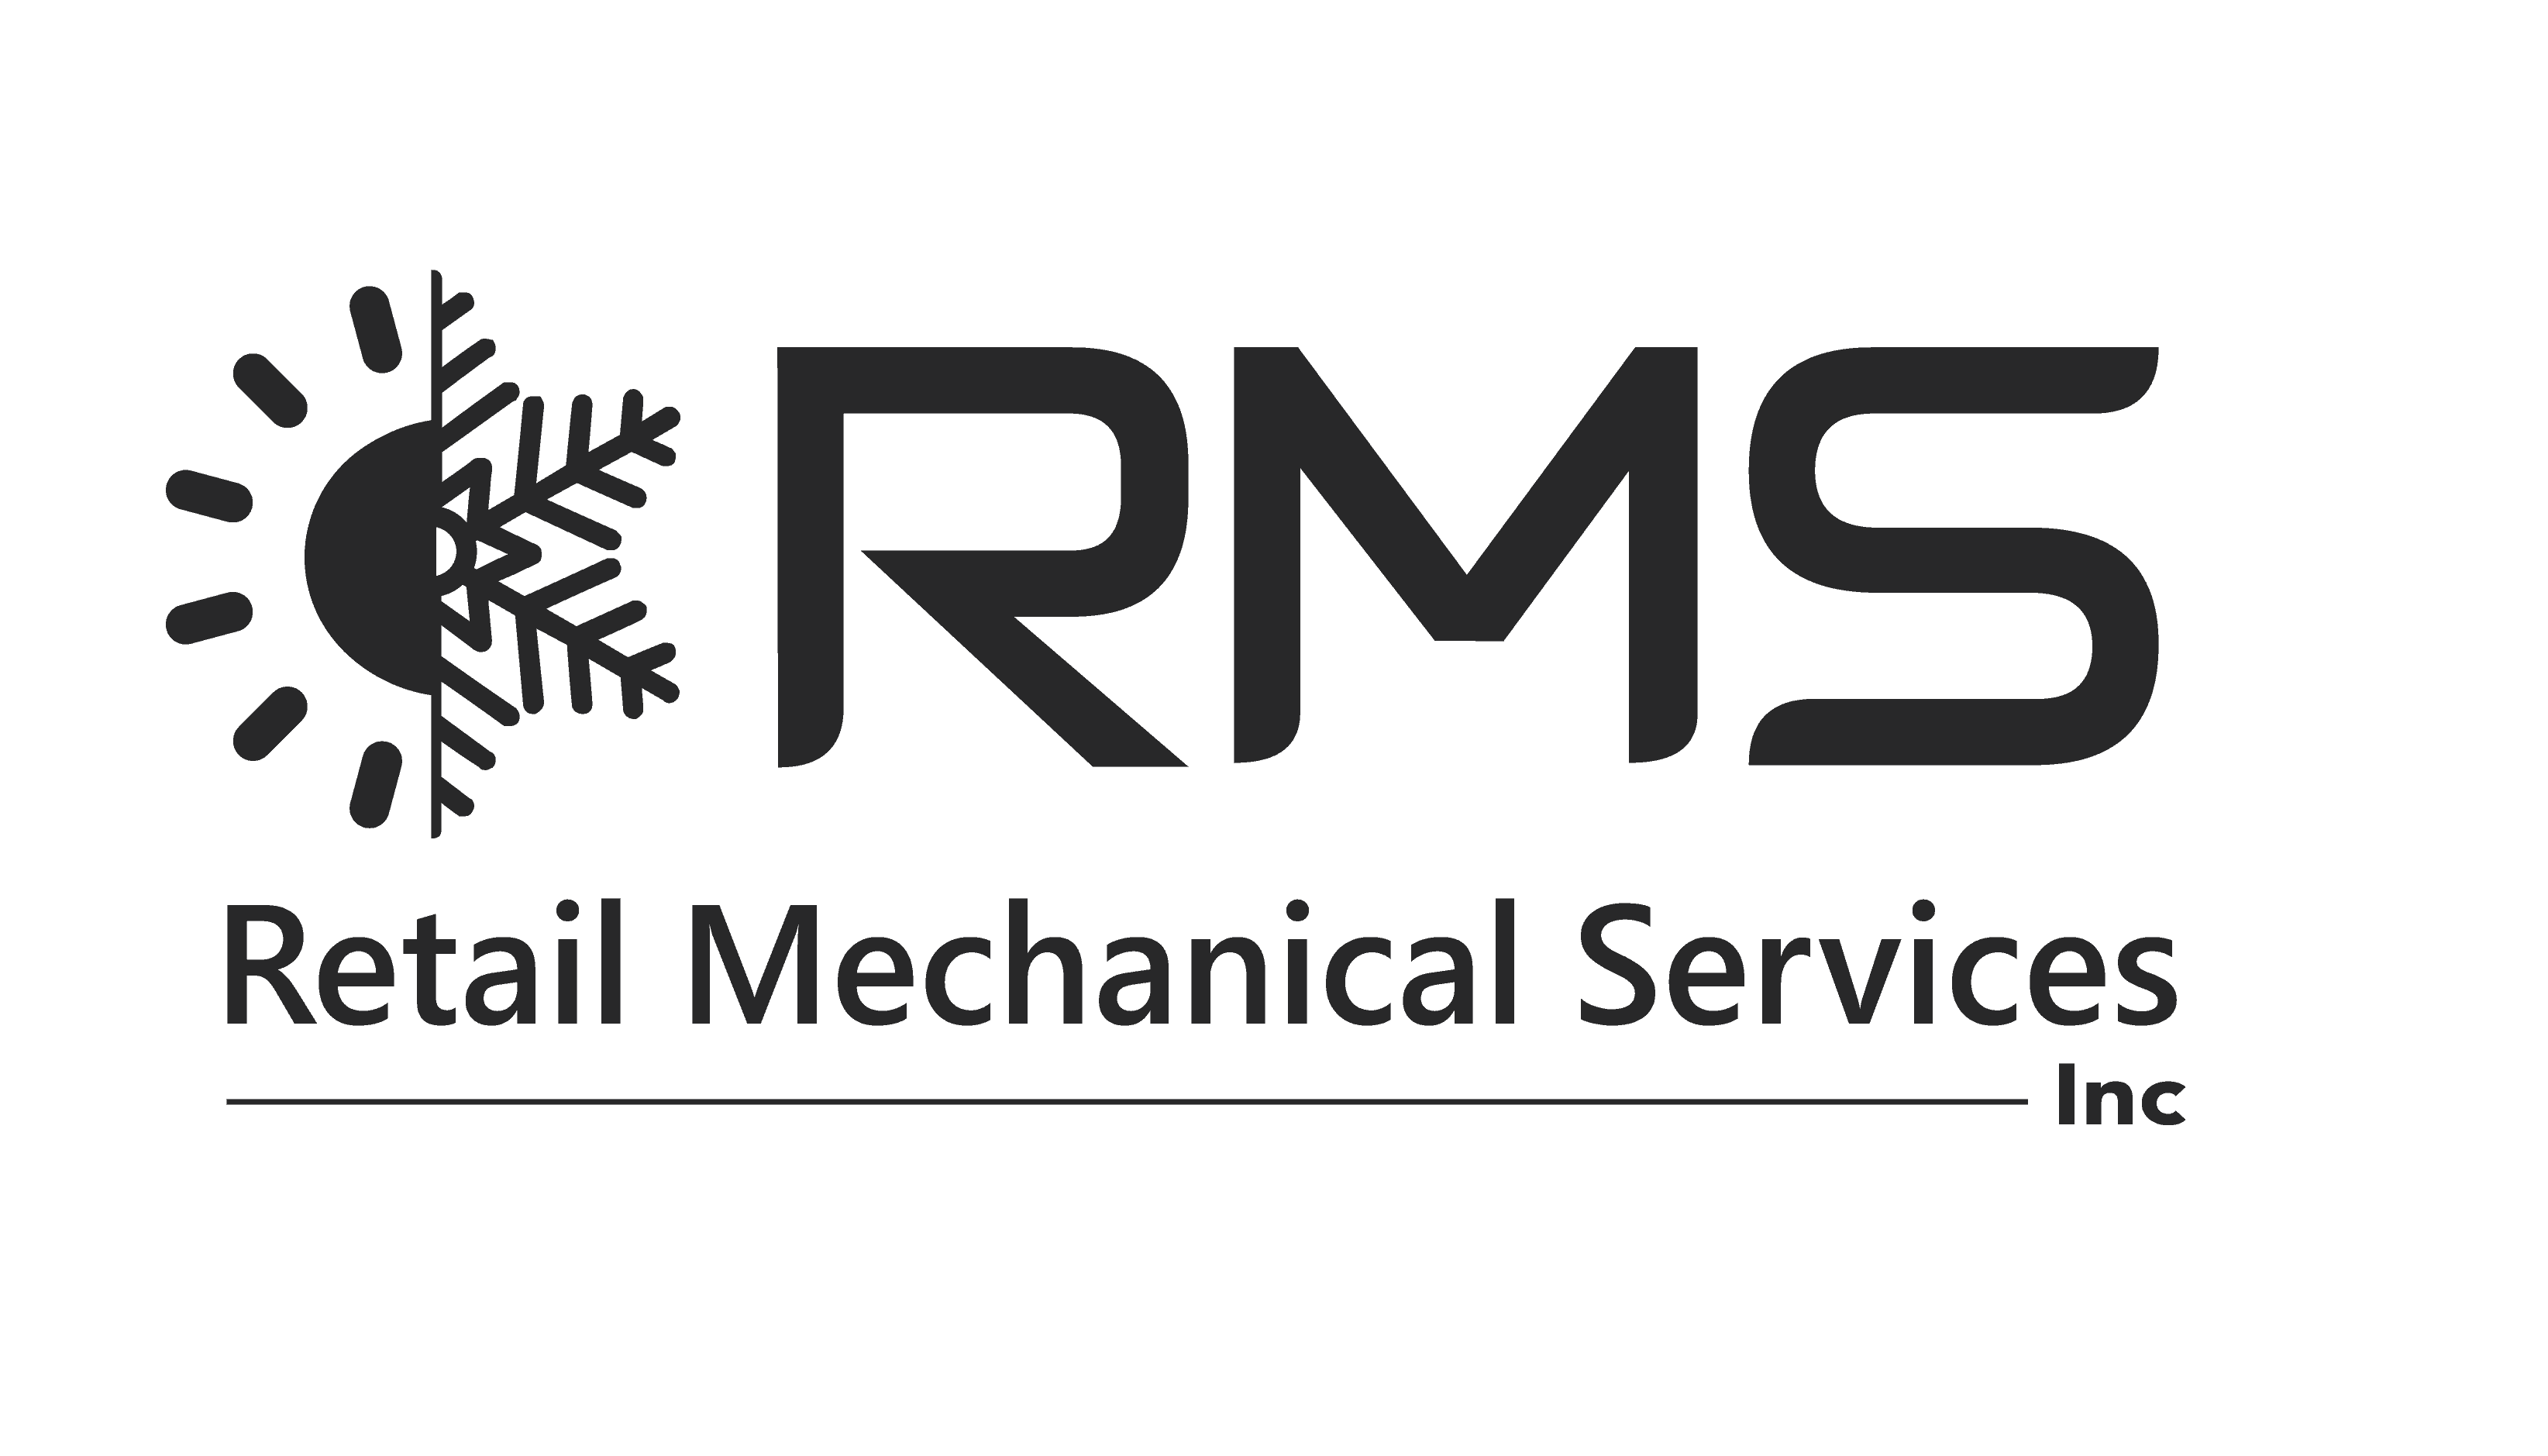 Rms letter logo design on black background Vector Image